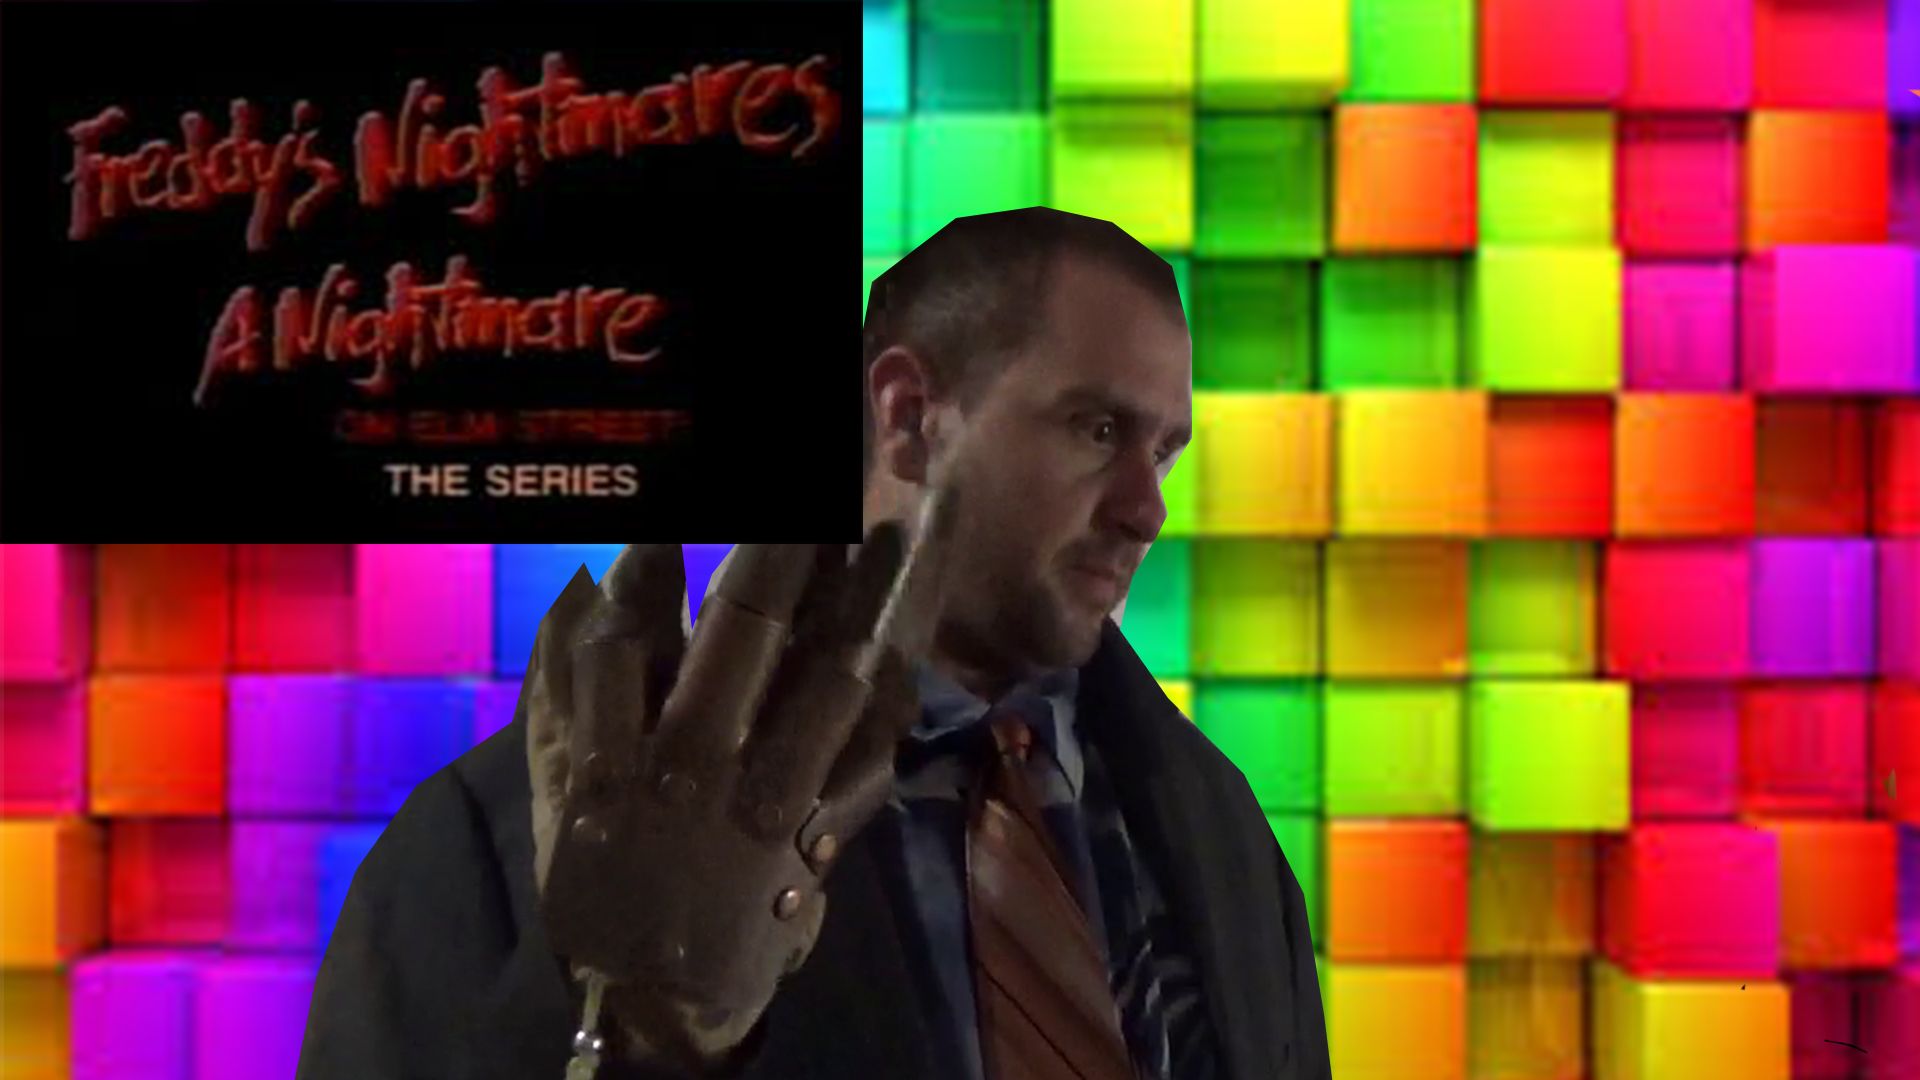 Freddy's Nightmares background